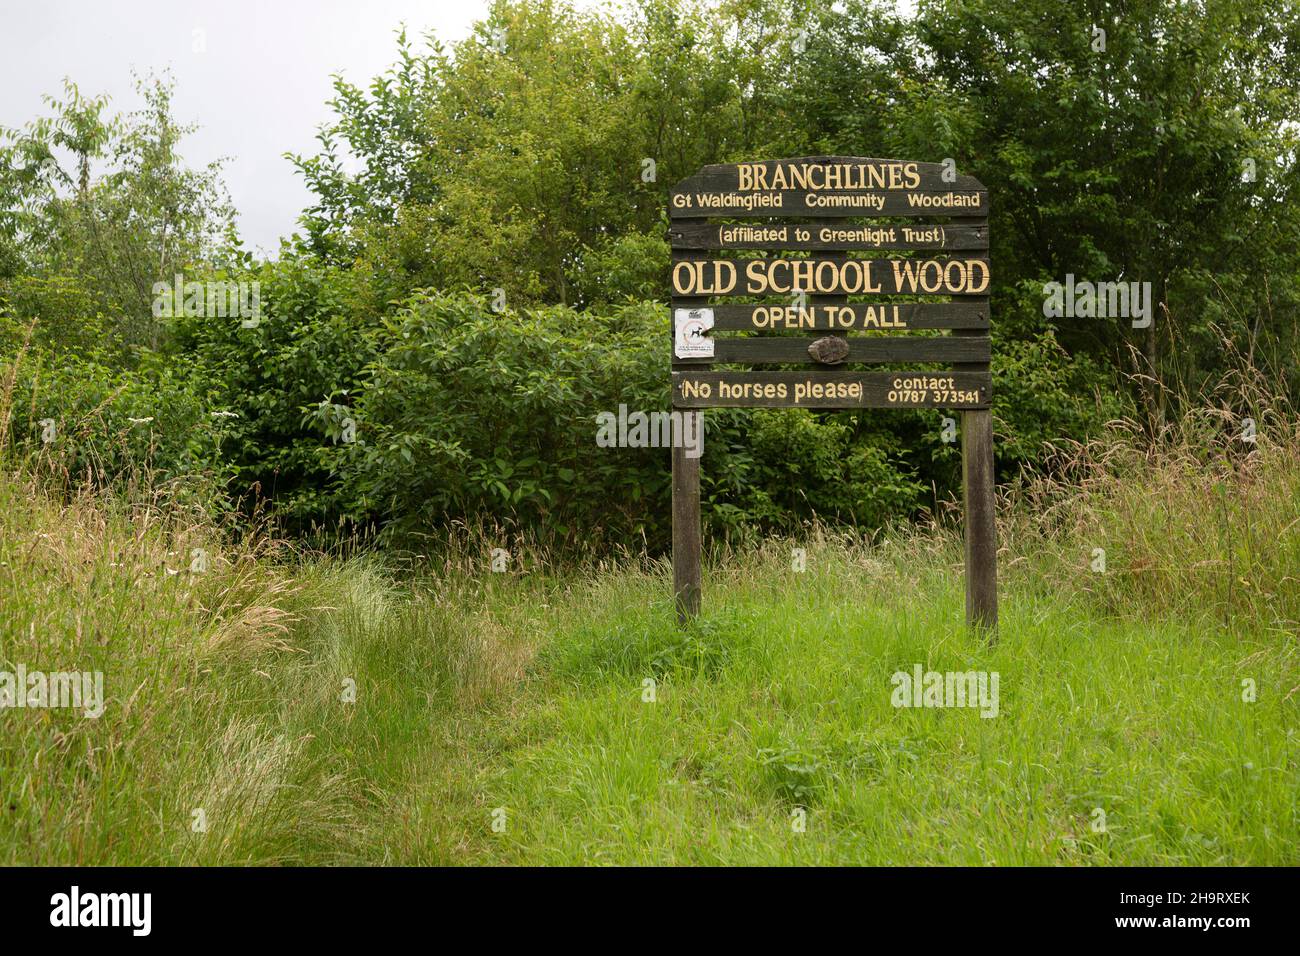 Branchlines community woodland, Old School Wood, Great Waldingfield, Suffolk, England, UK Stock Photo